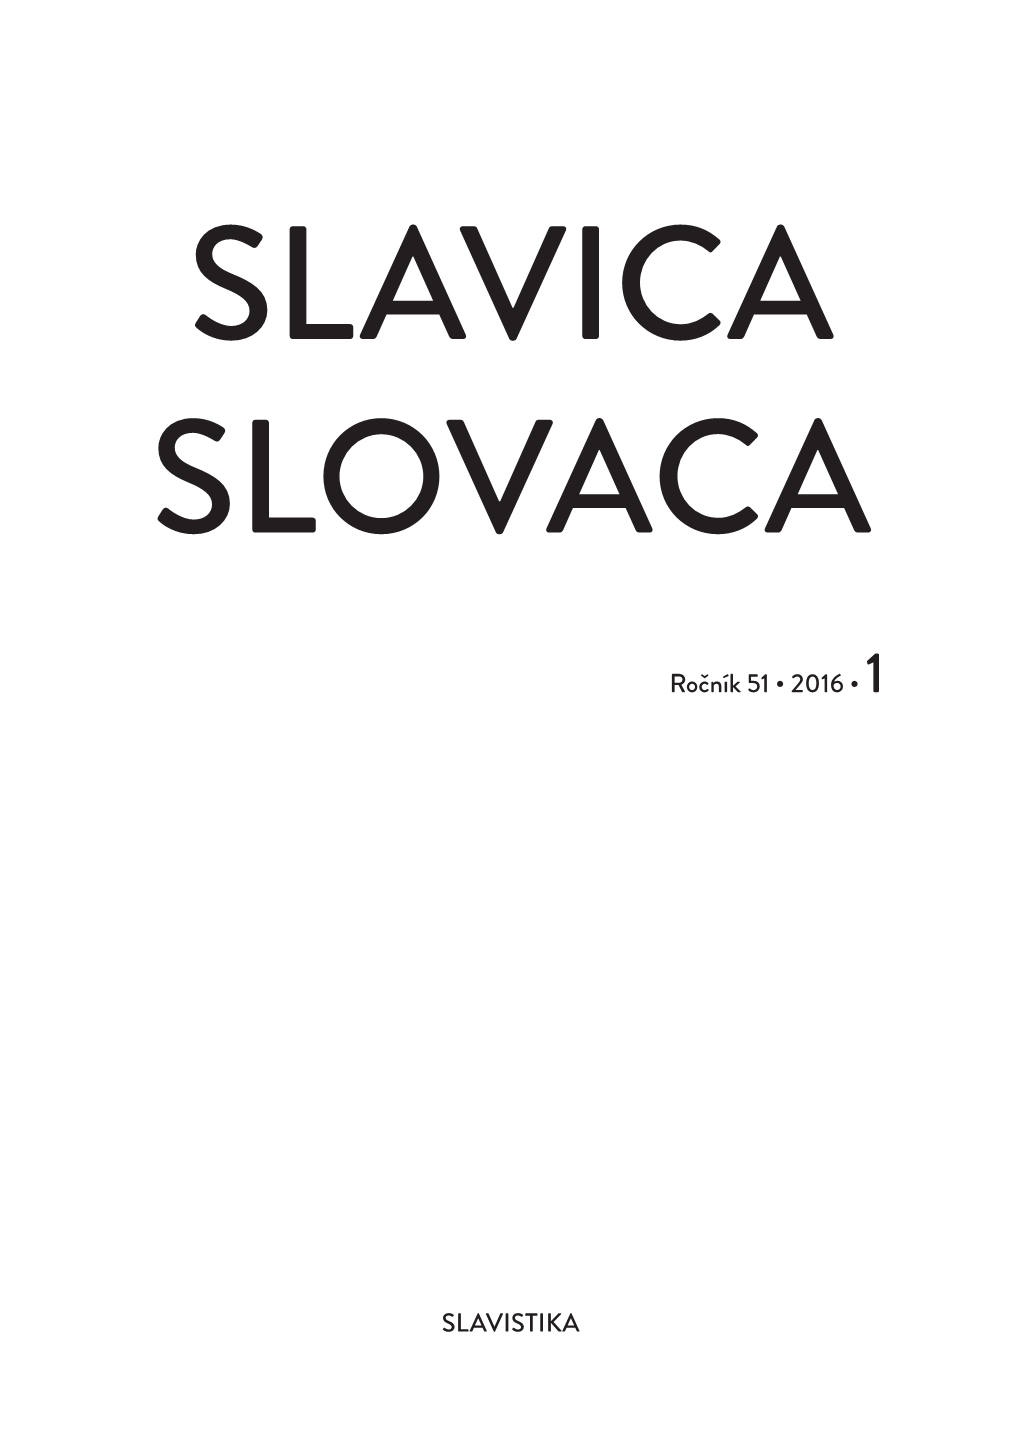 Slavica Slovaca